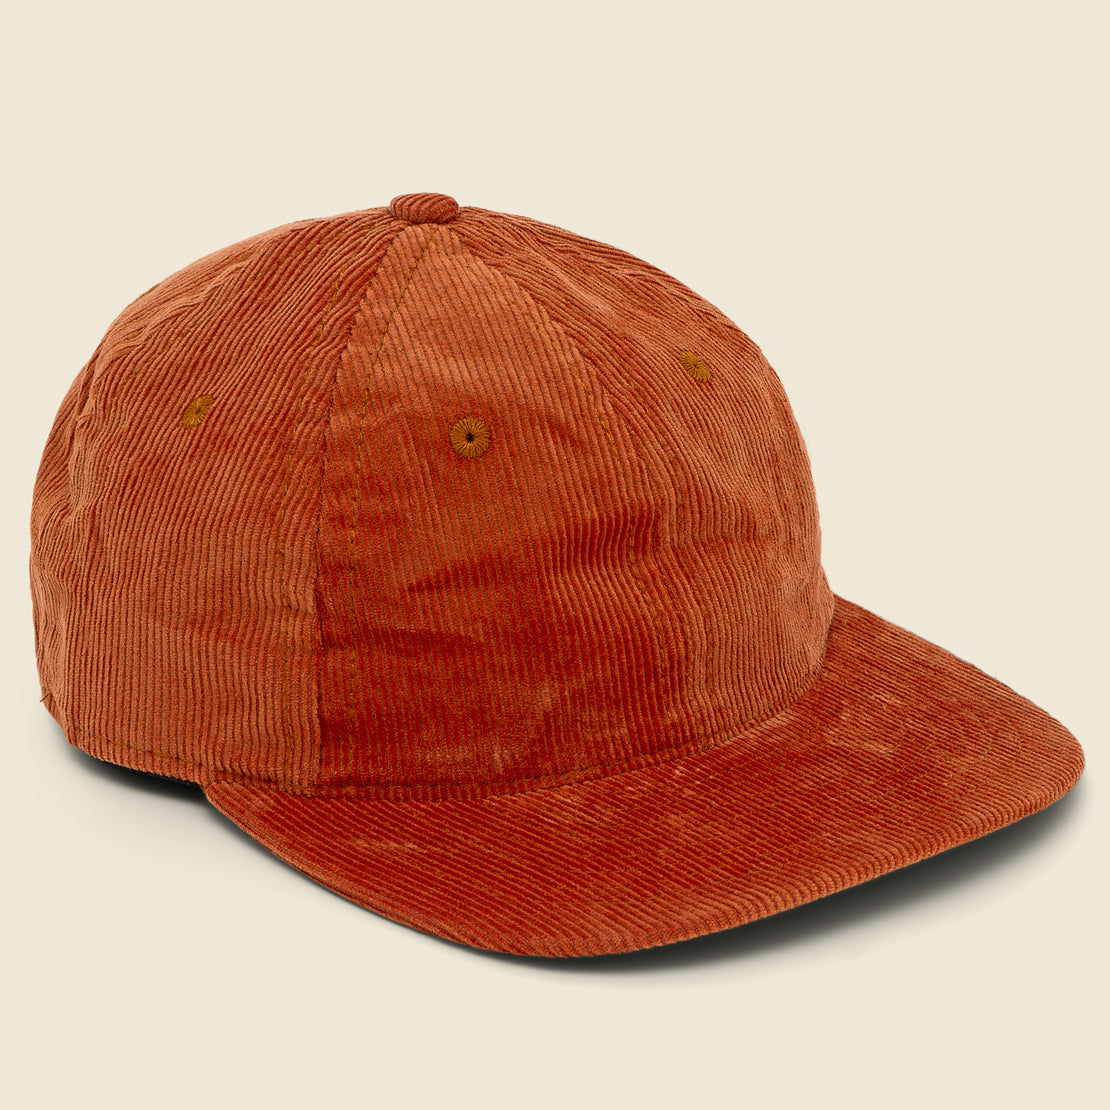 Save Khaki Corduroy Baseball Cap - Rust